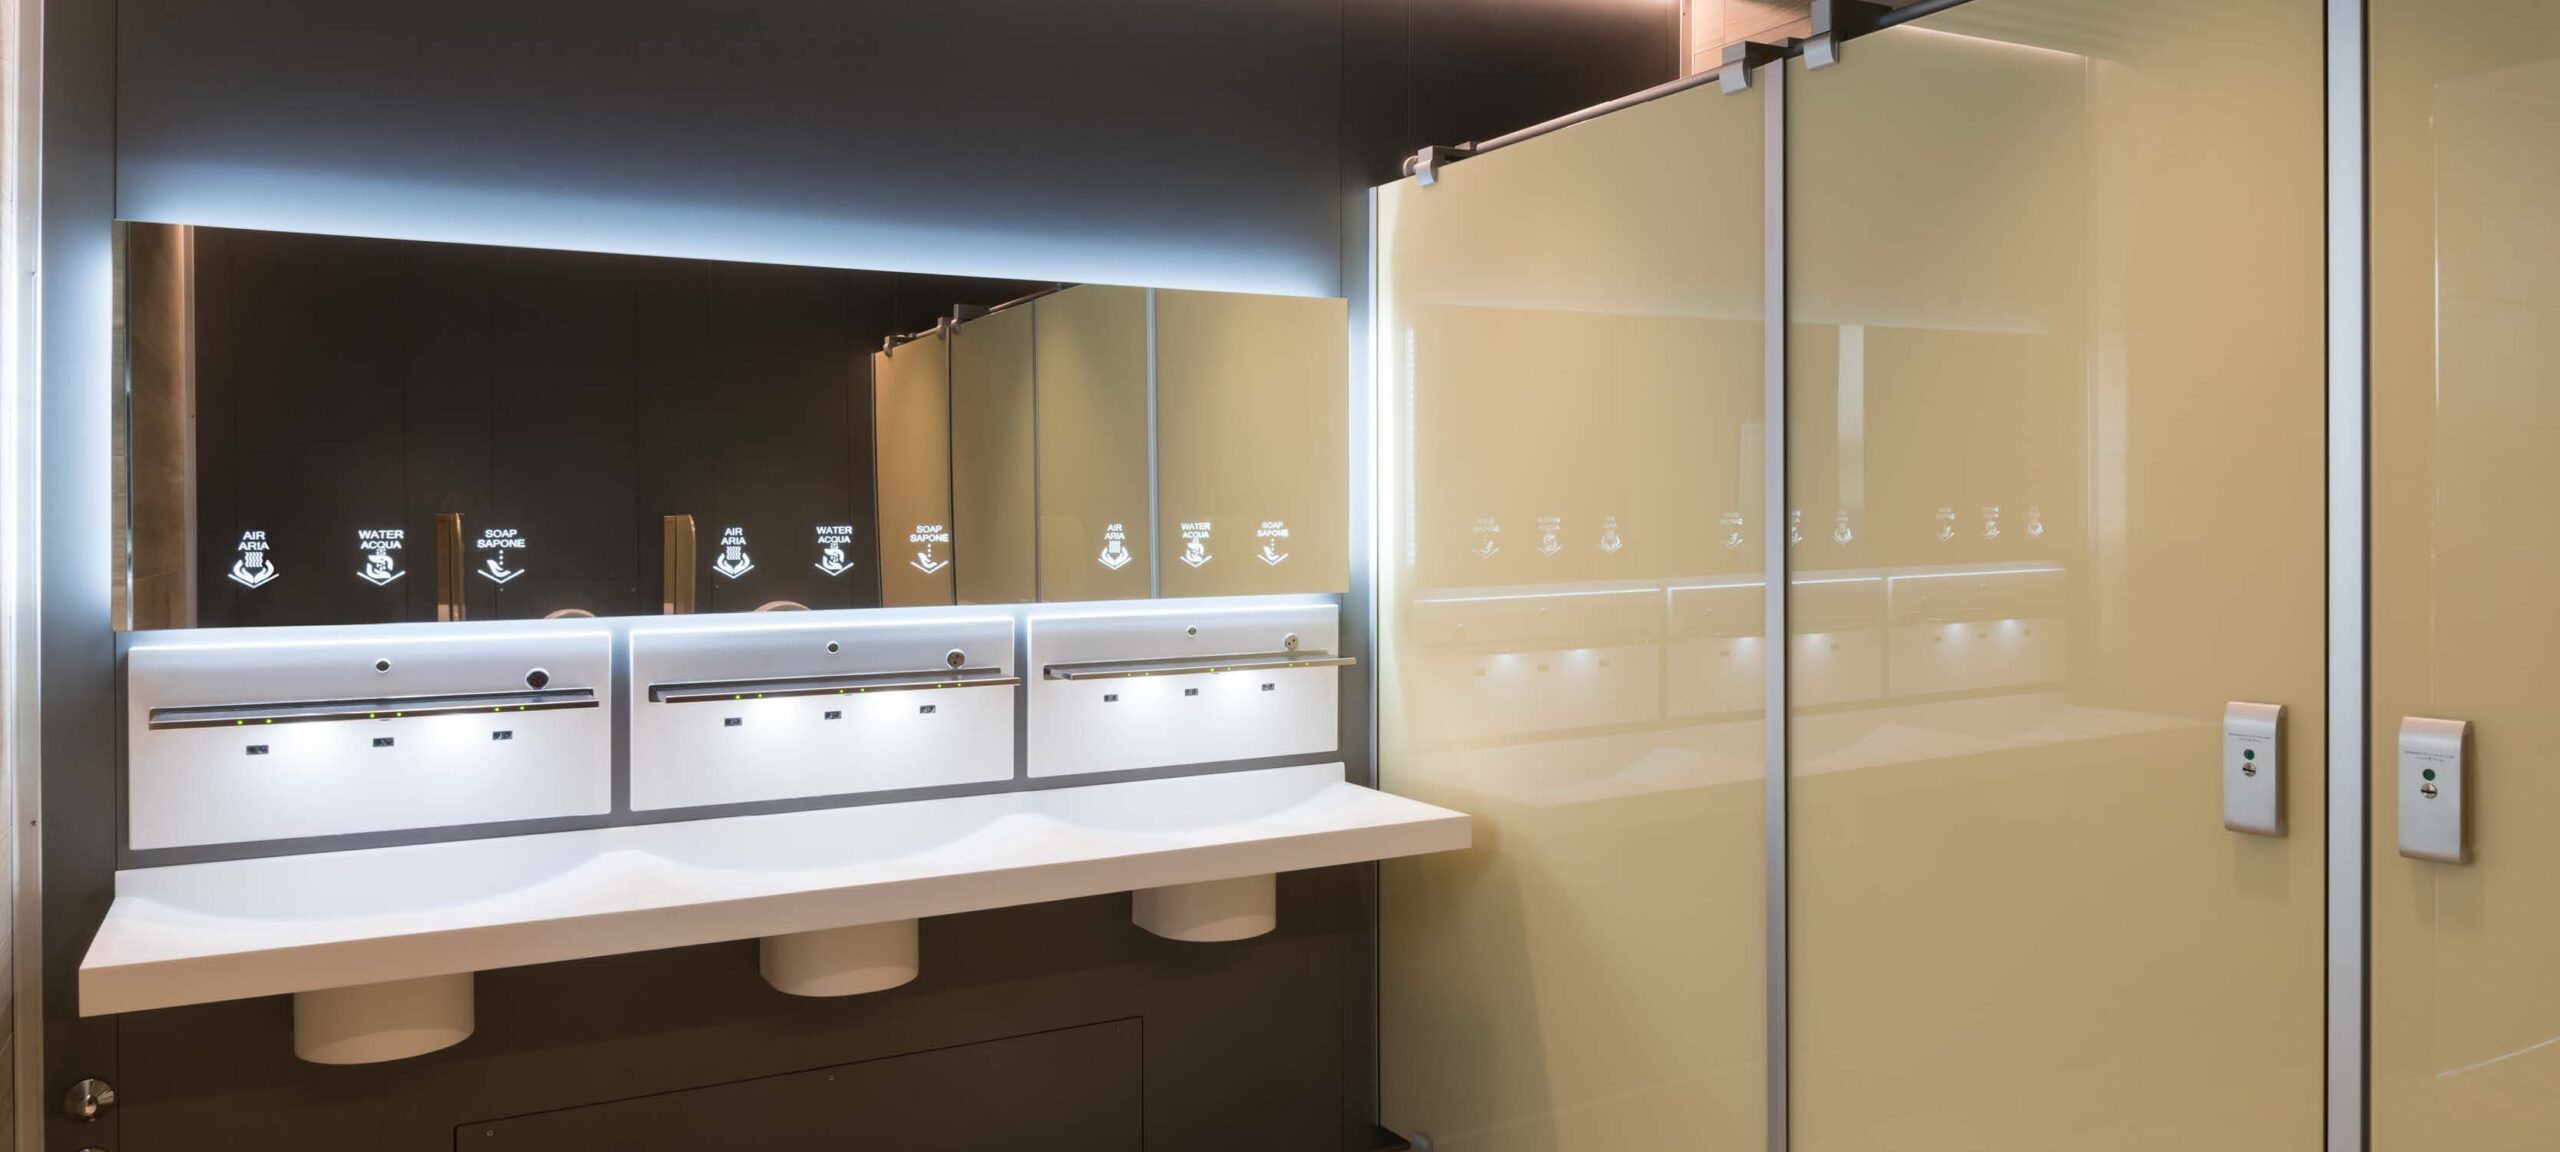 Sistemi igienici prefabbricati: design e funzionalità